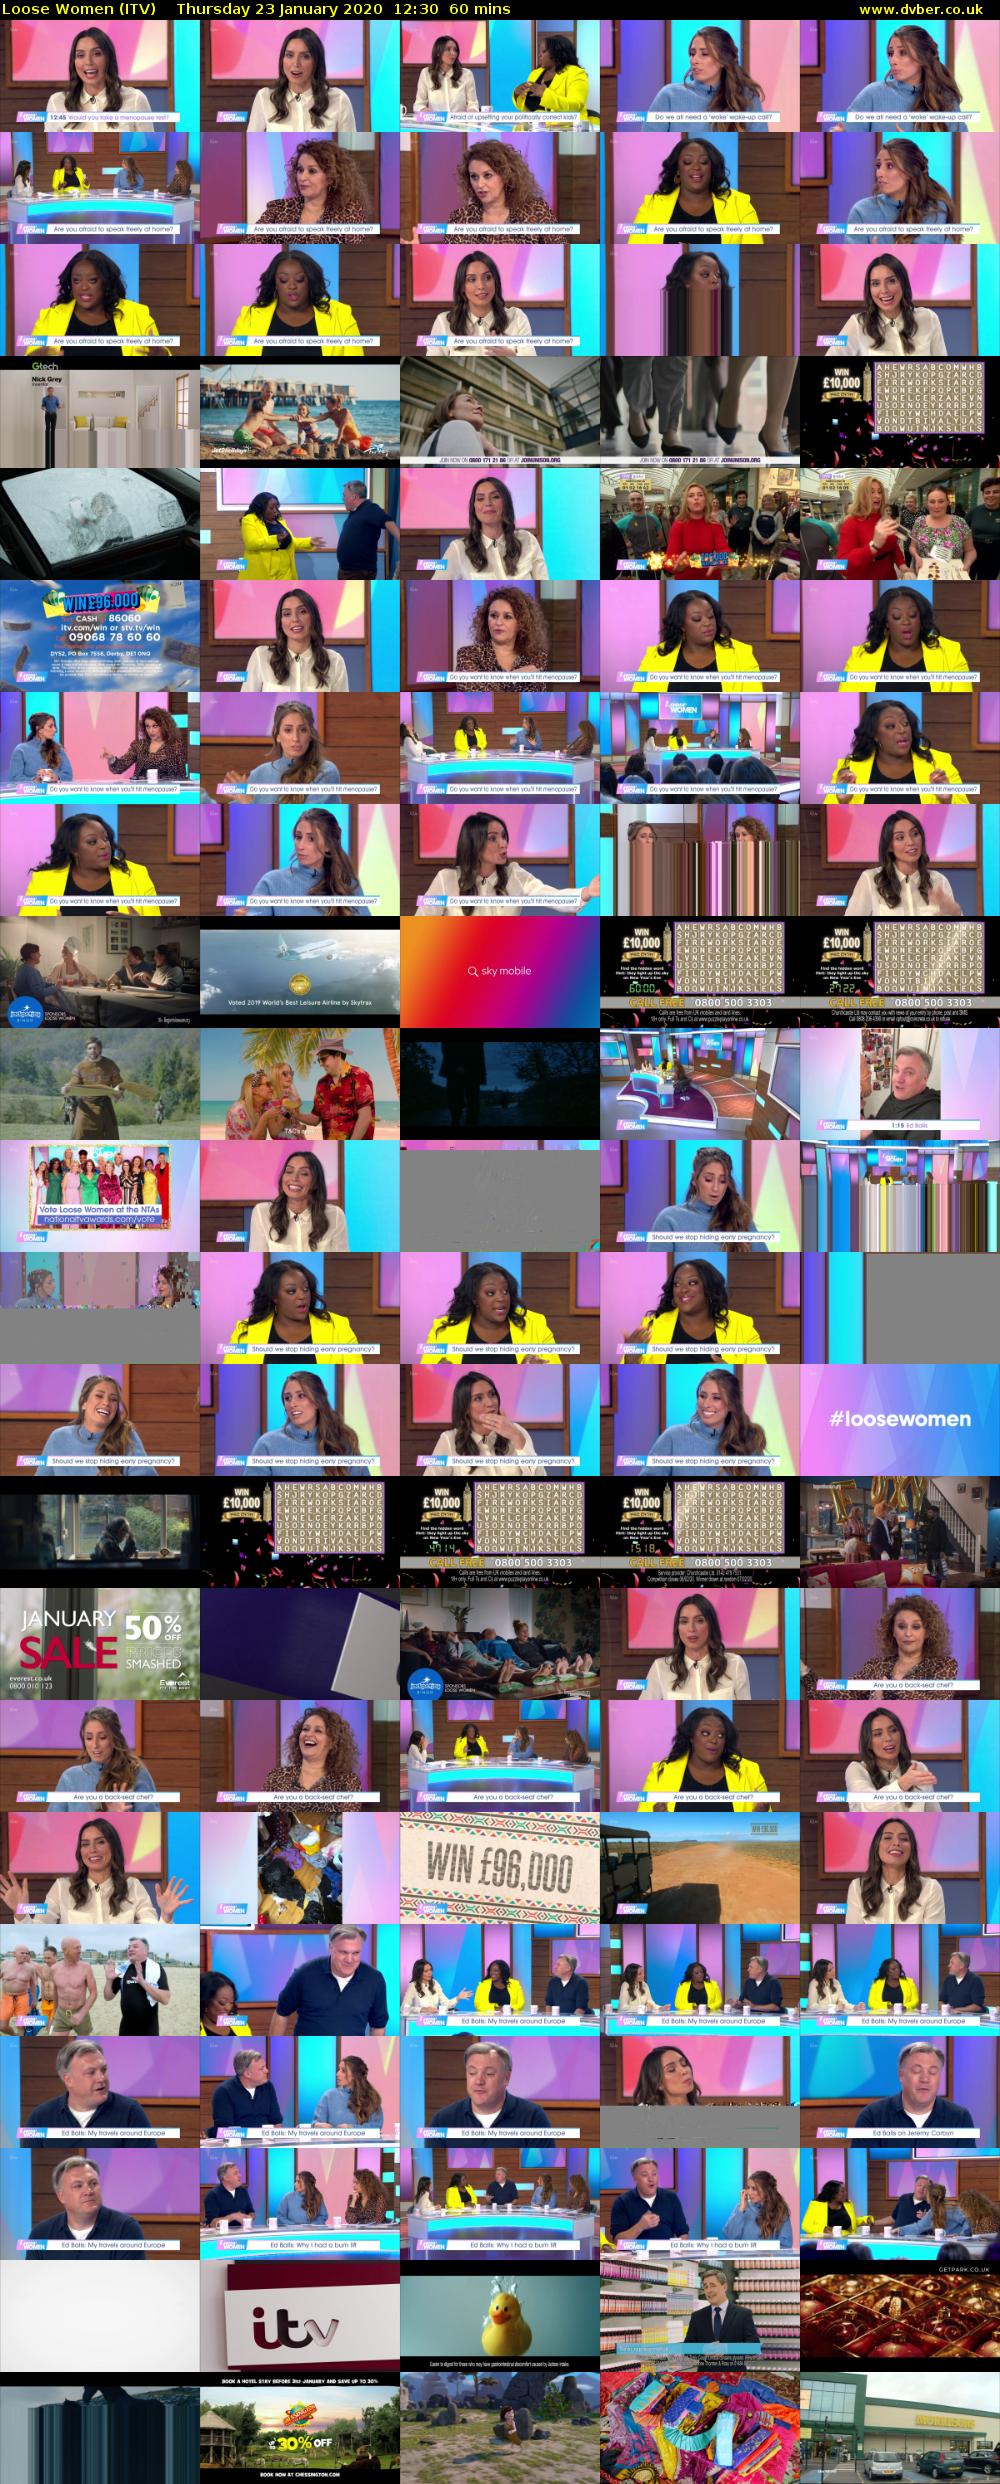 Loose Women (ITV) Thursday 23 January 2020 12:30 - 13:30